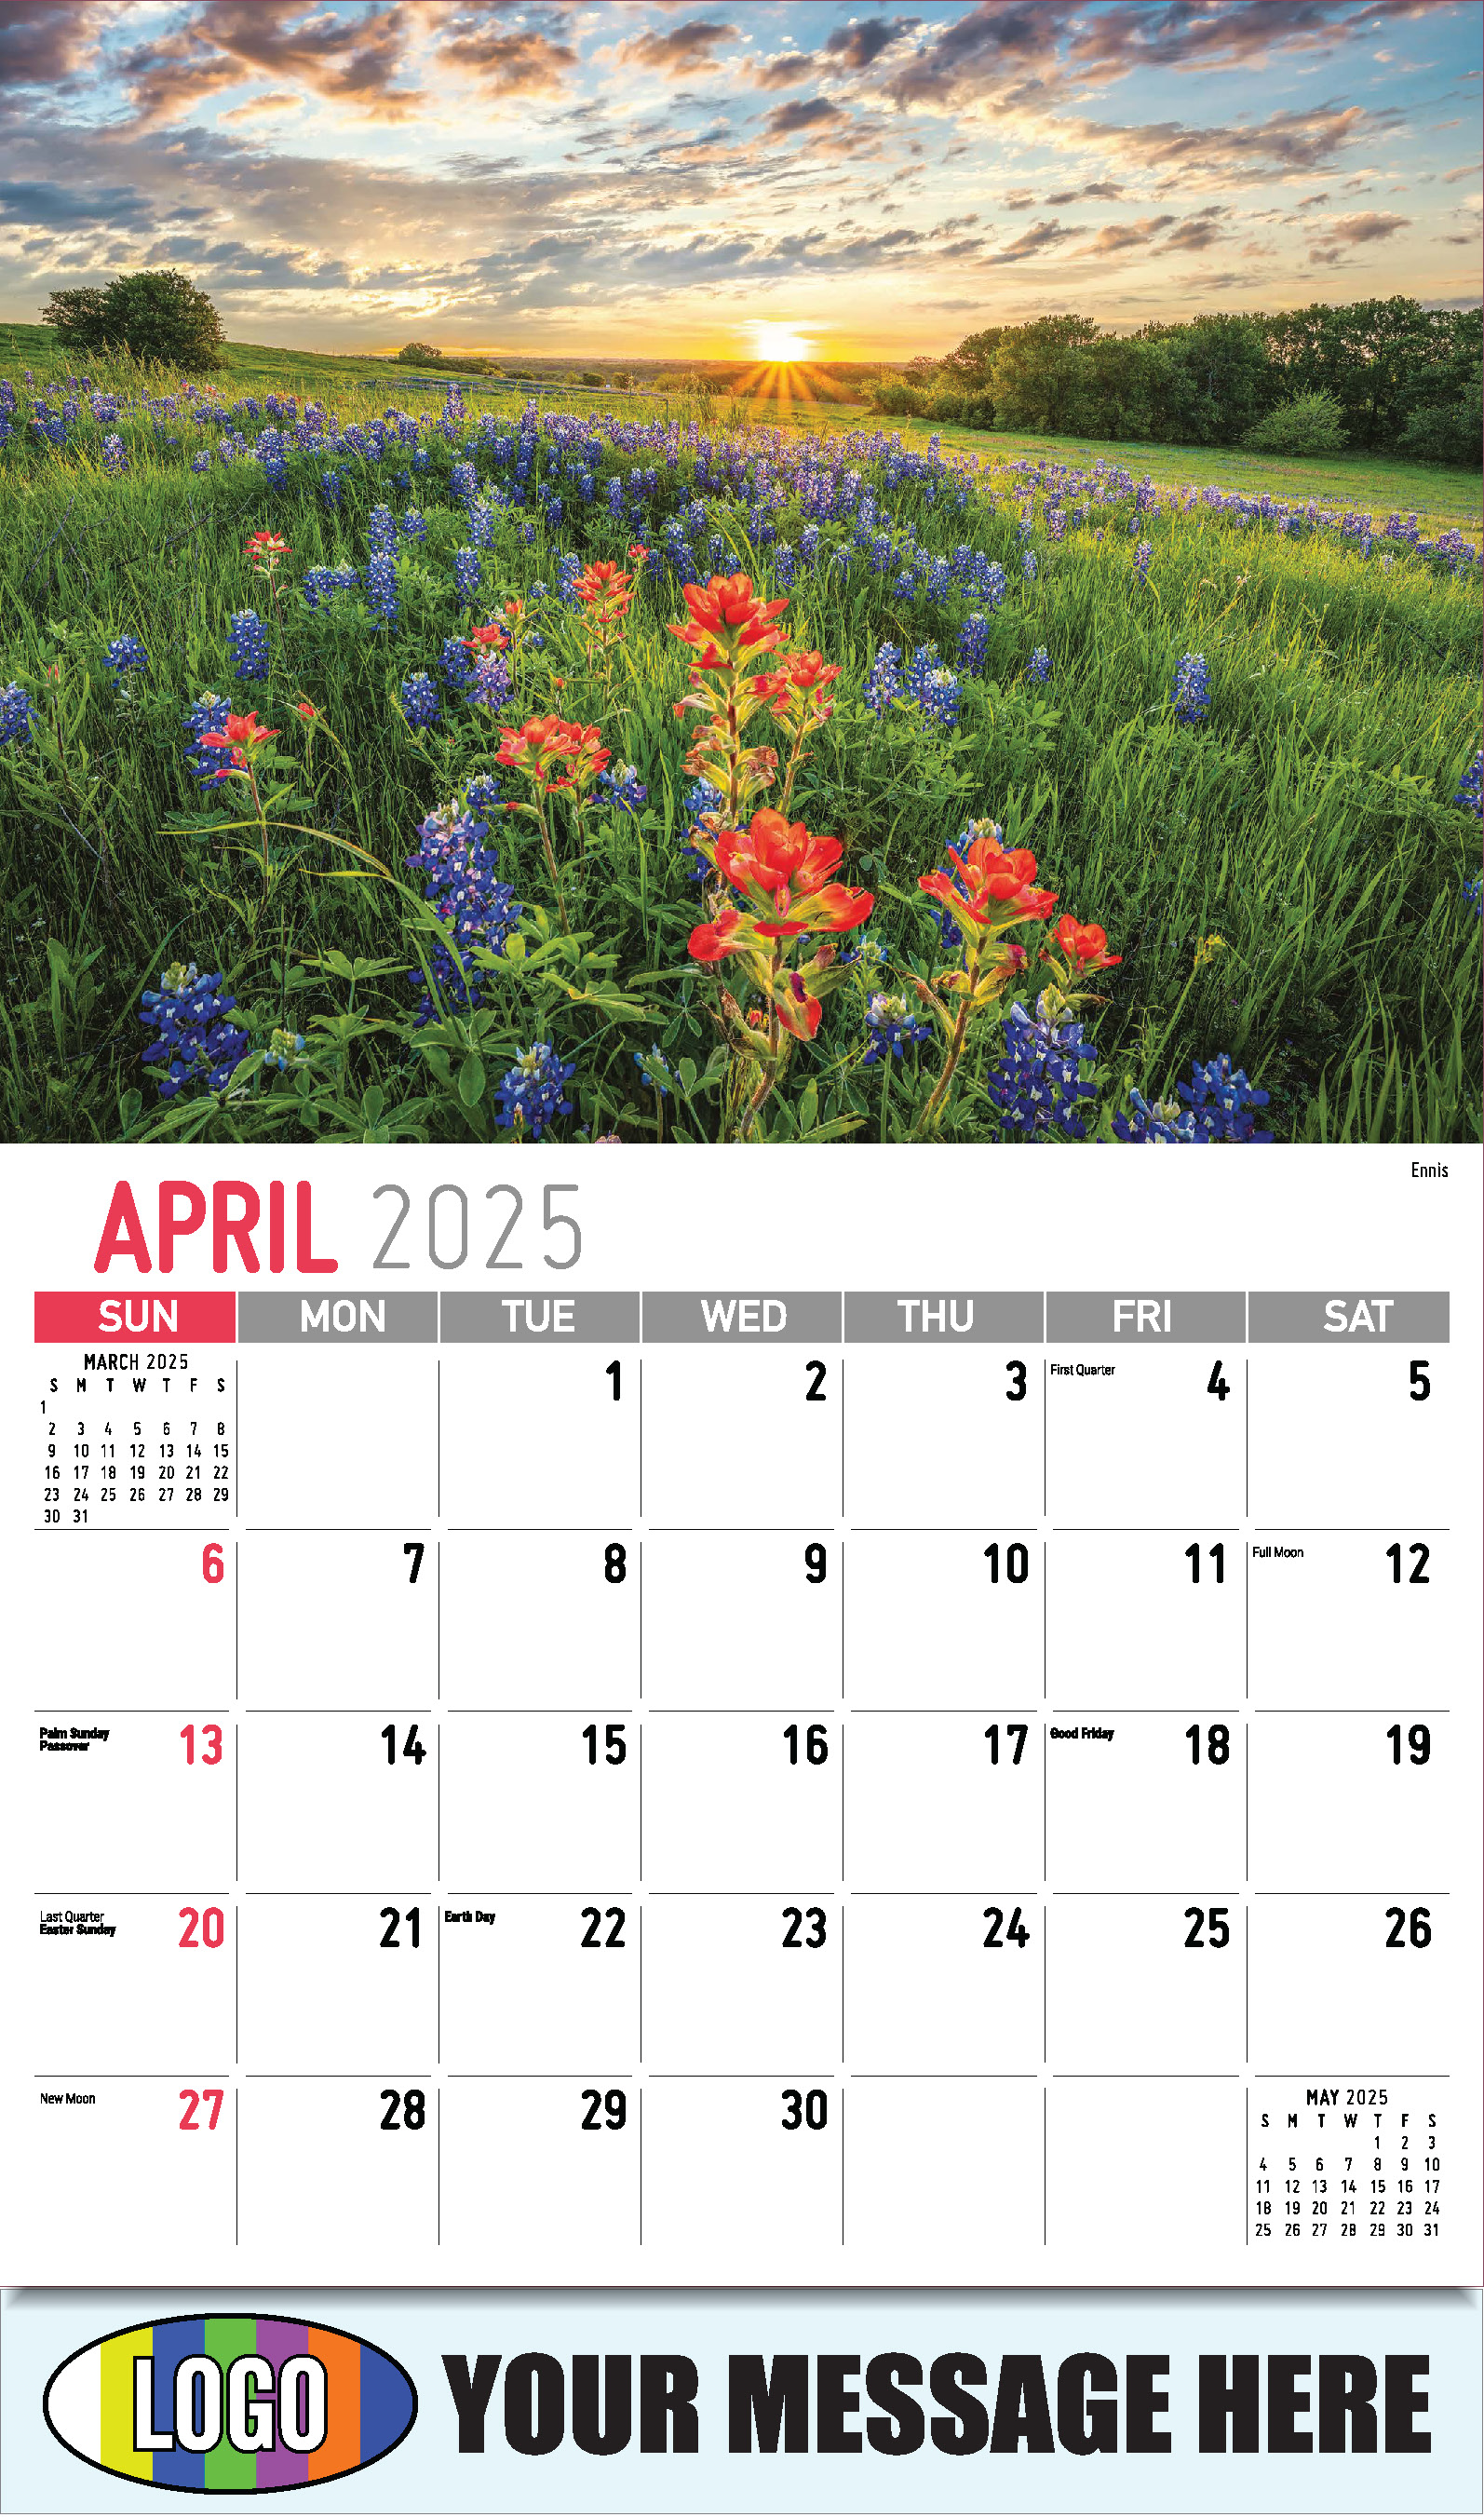 Scenes of Texas 2025 Business Advertising Calendar - April